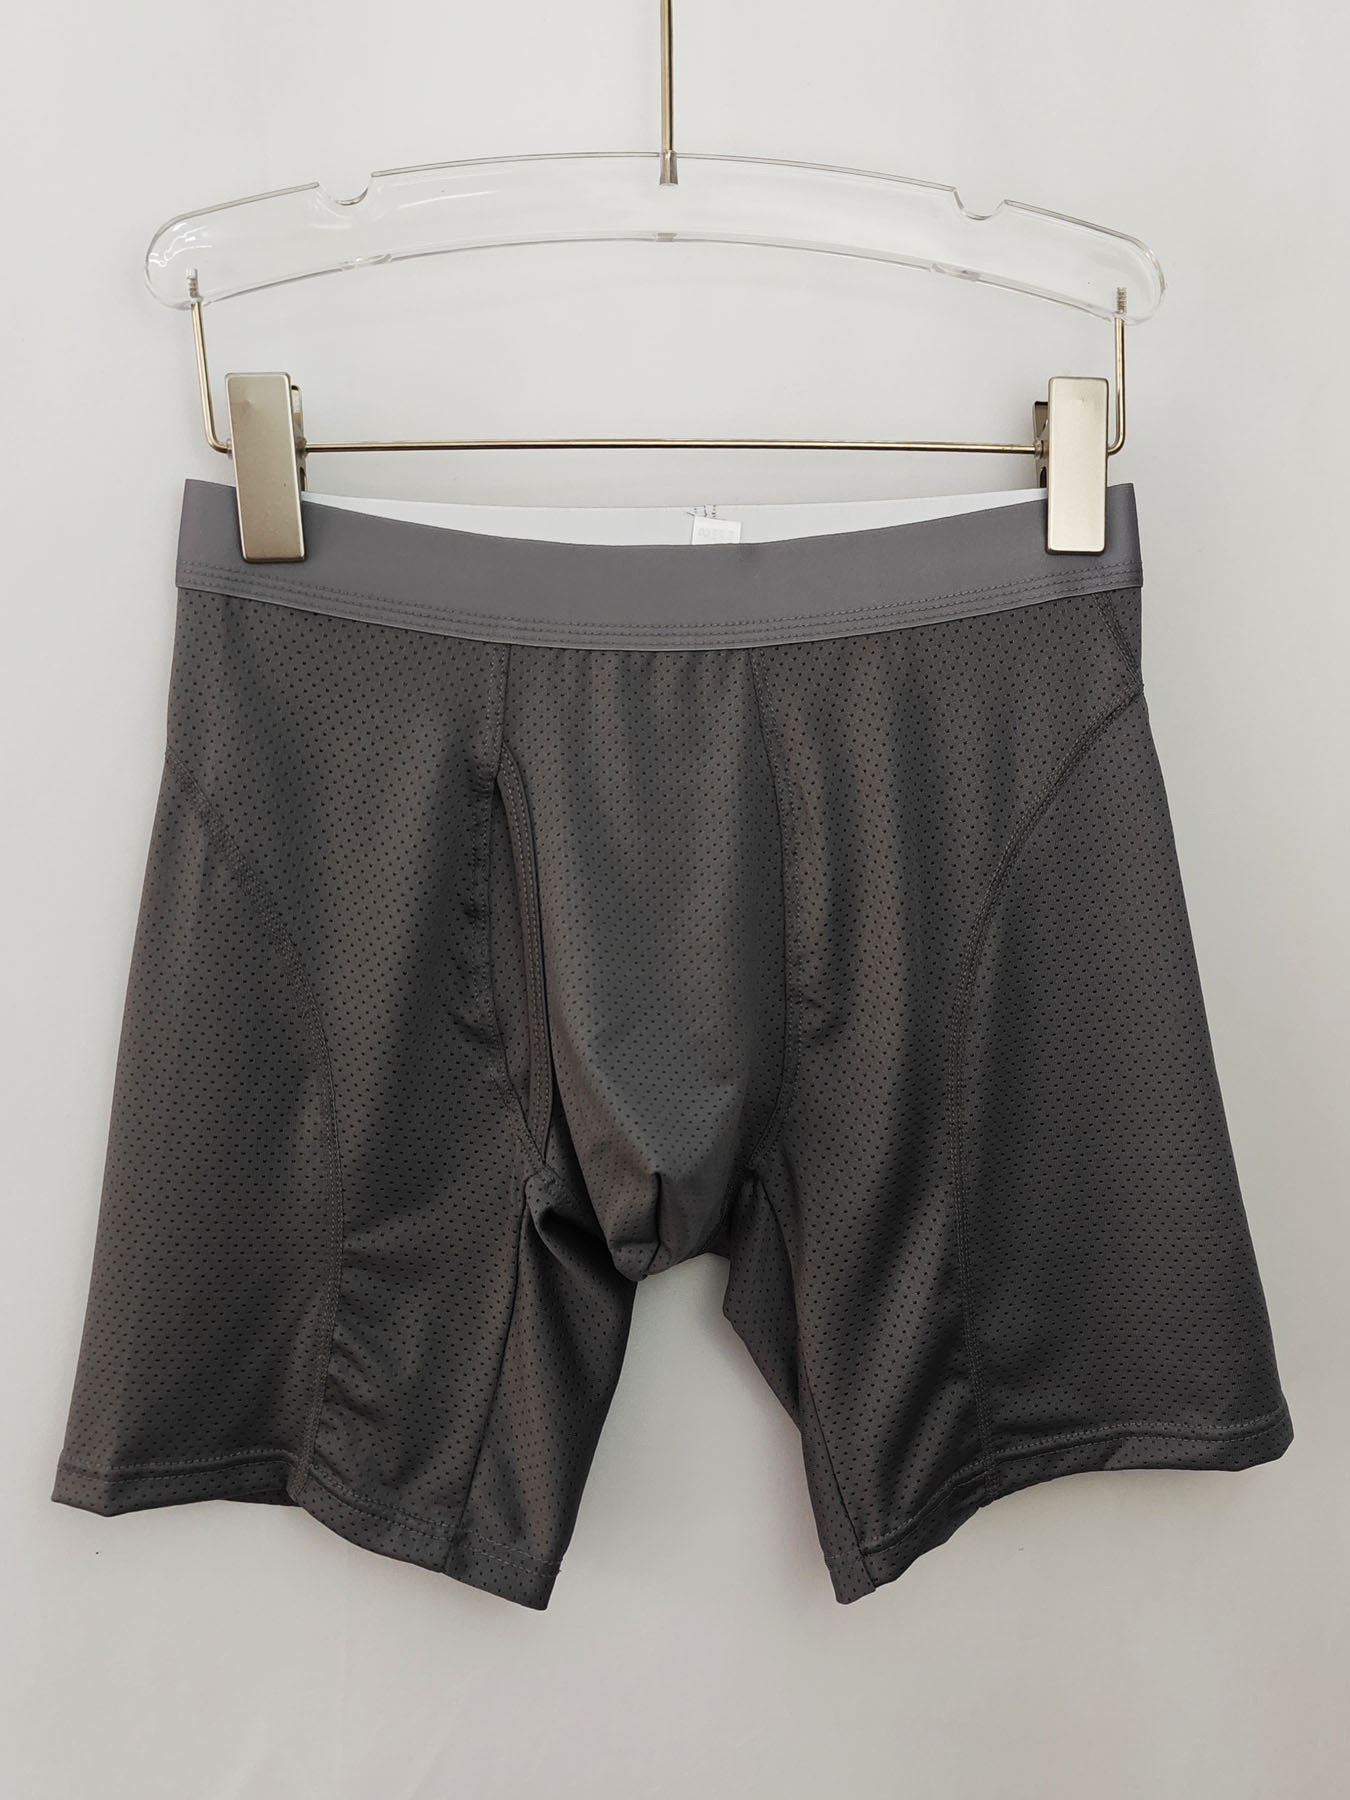 Asian Size Men's Underwear Anti dislocation Pouch Breathable